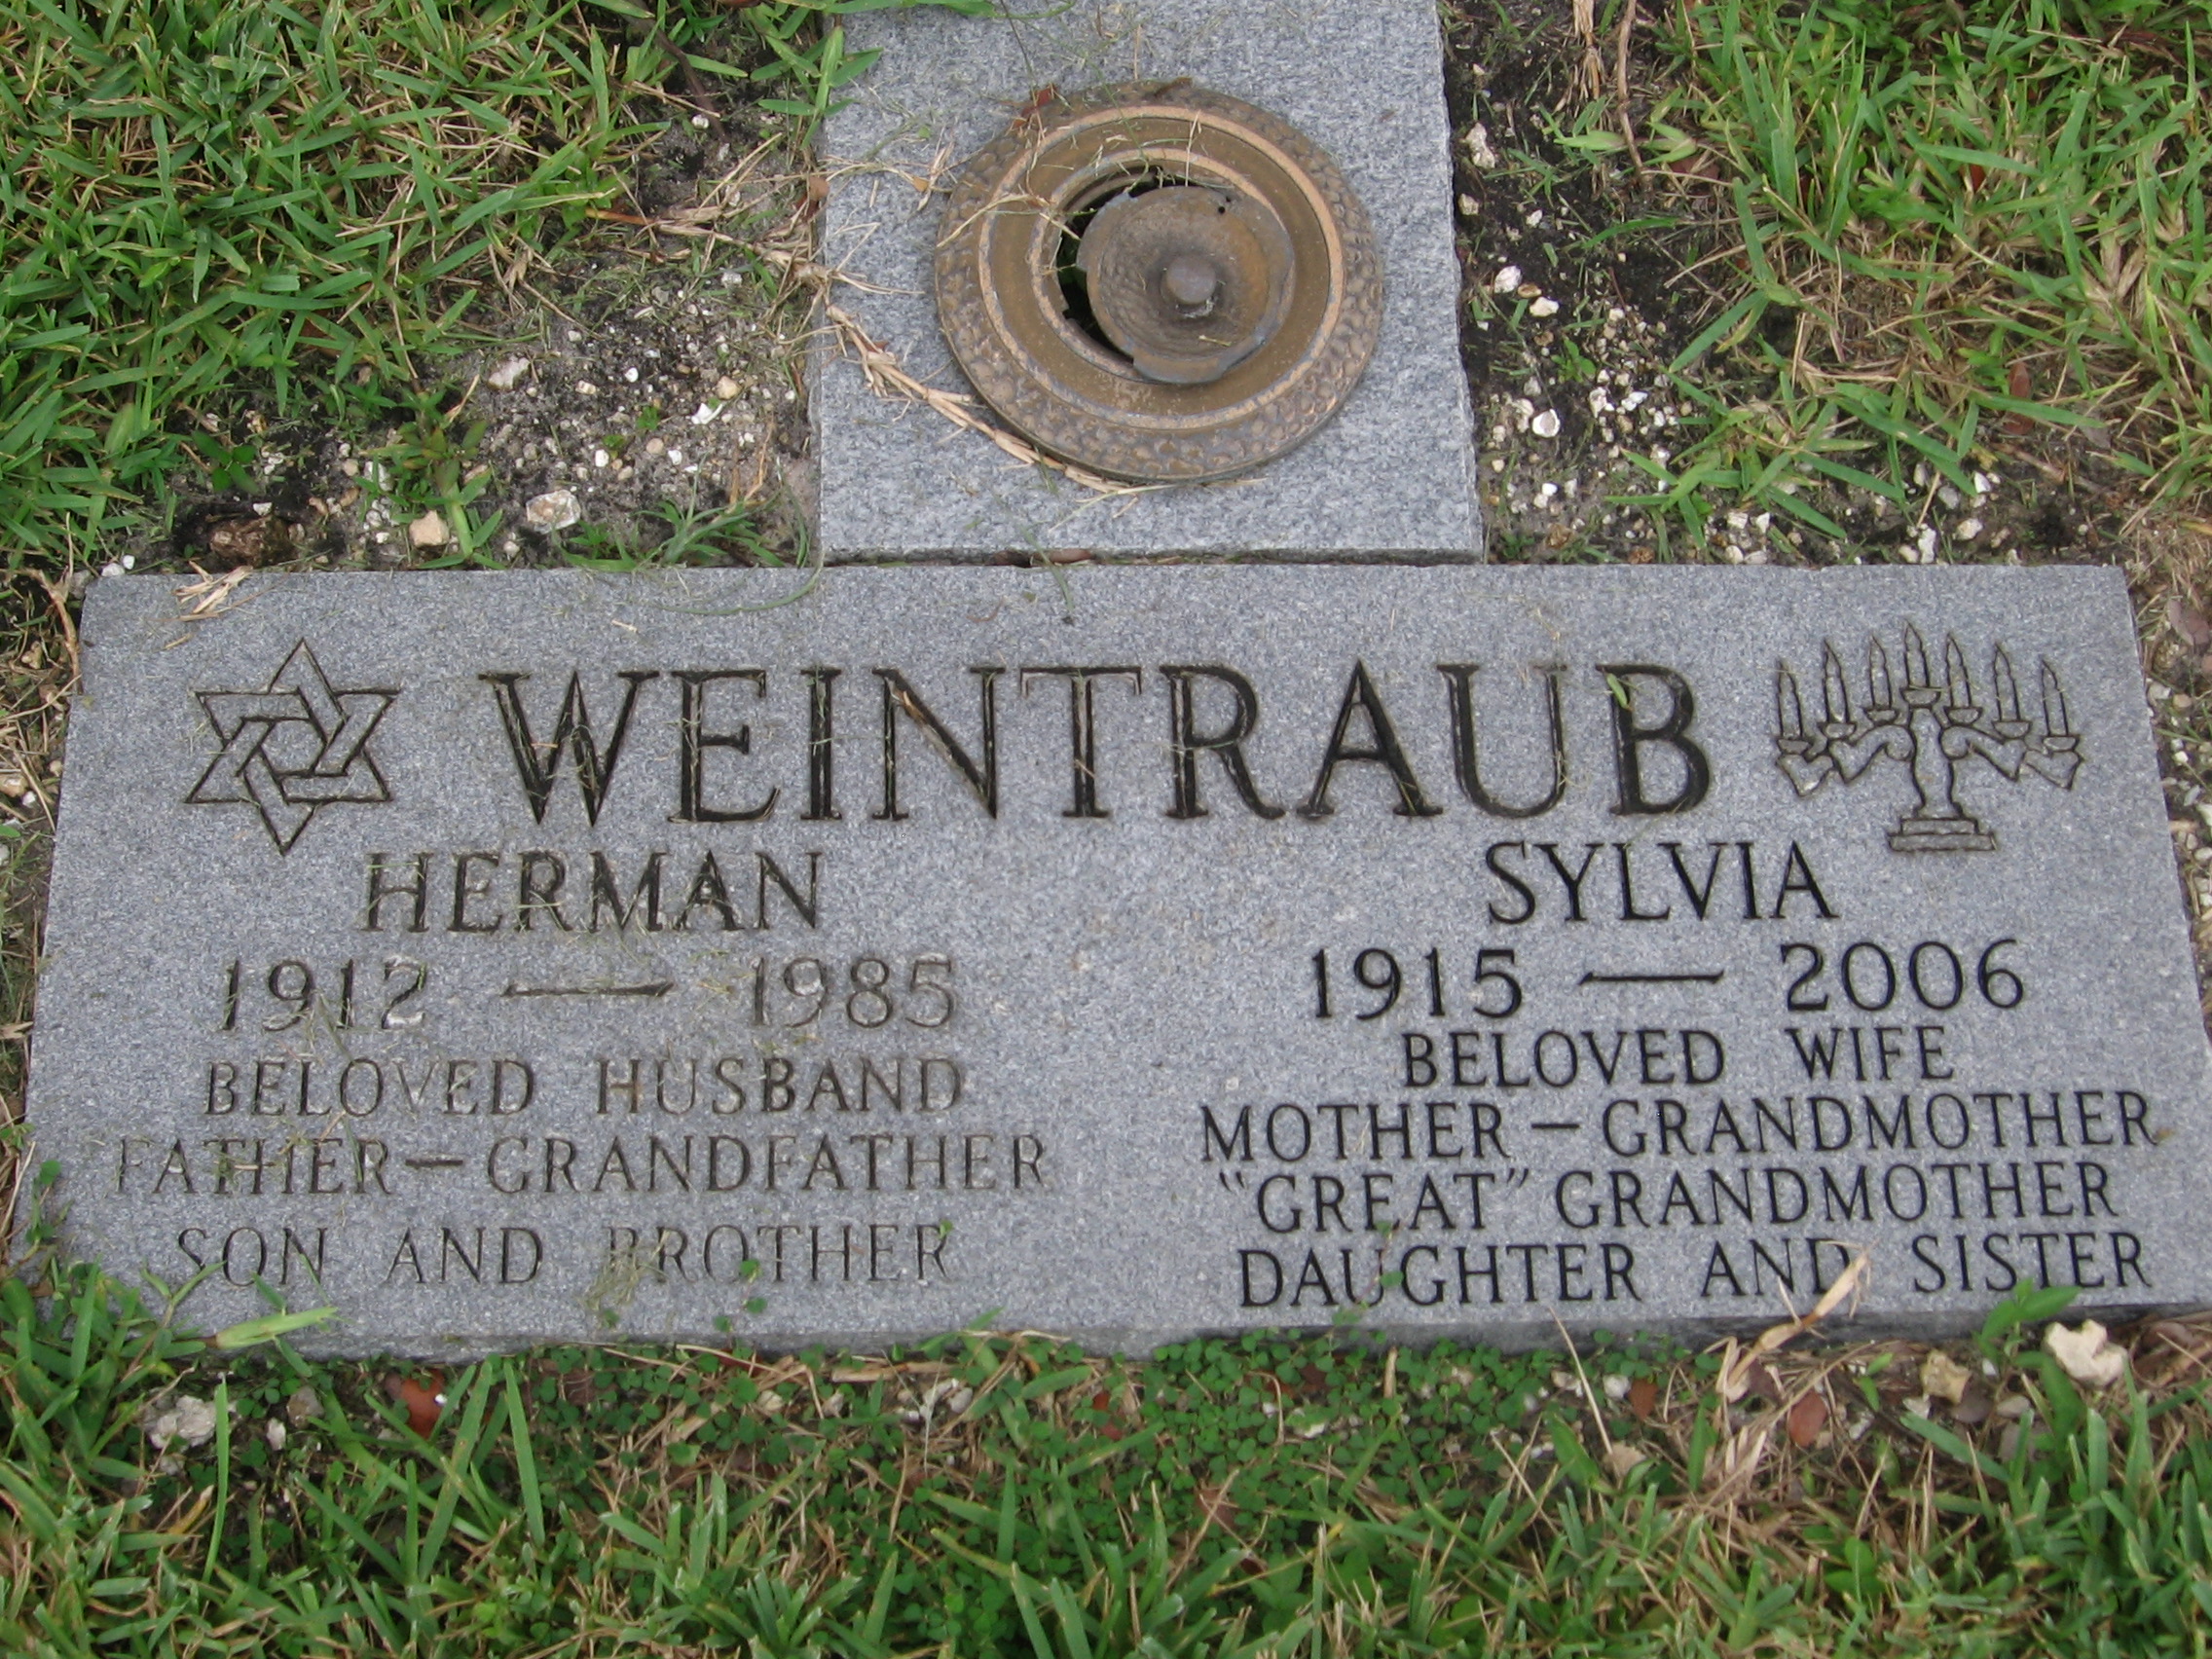 Herman Weintraub